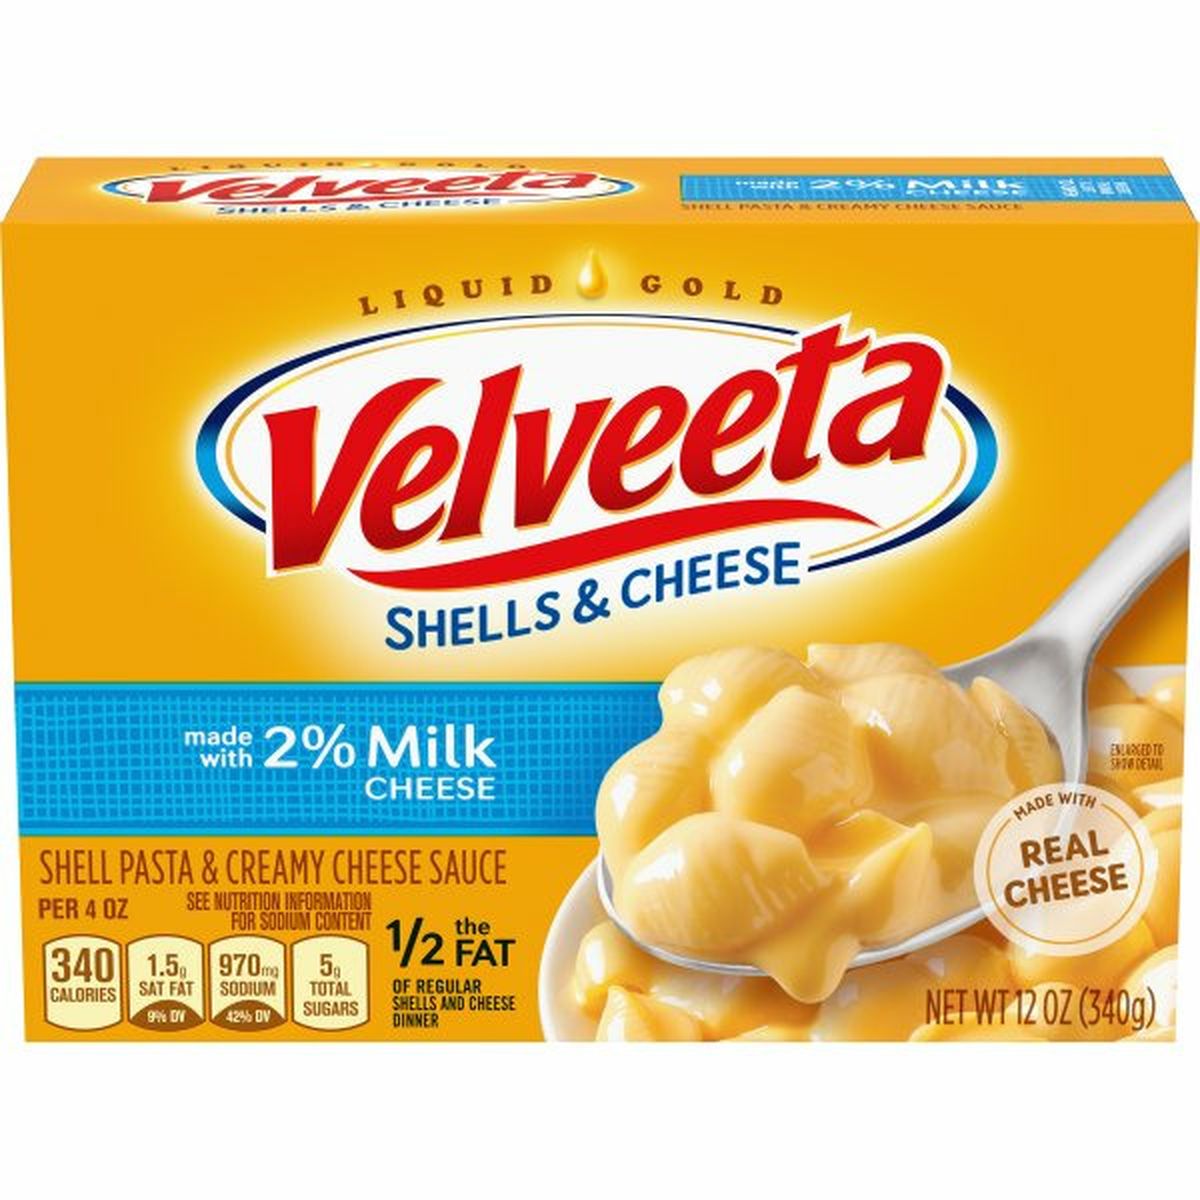 Calories in VELVEETA Shells & Cheese Made with 2% Milk Cheese